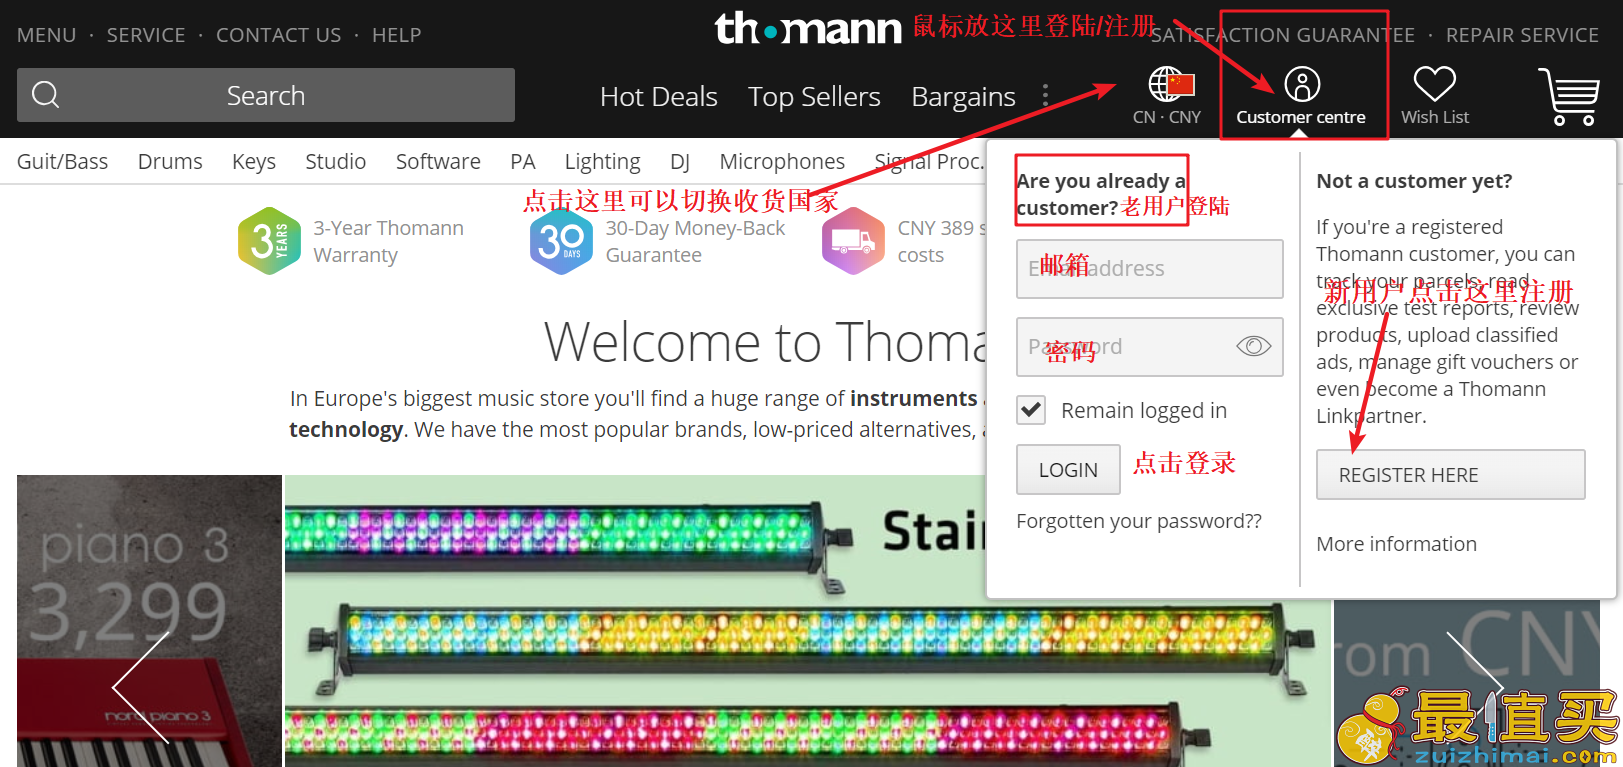 thomann官网-欧洲最大的乐器电商thomann 支持直邮中国 海淘真力音箱 吉他 琴-图片1